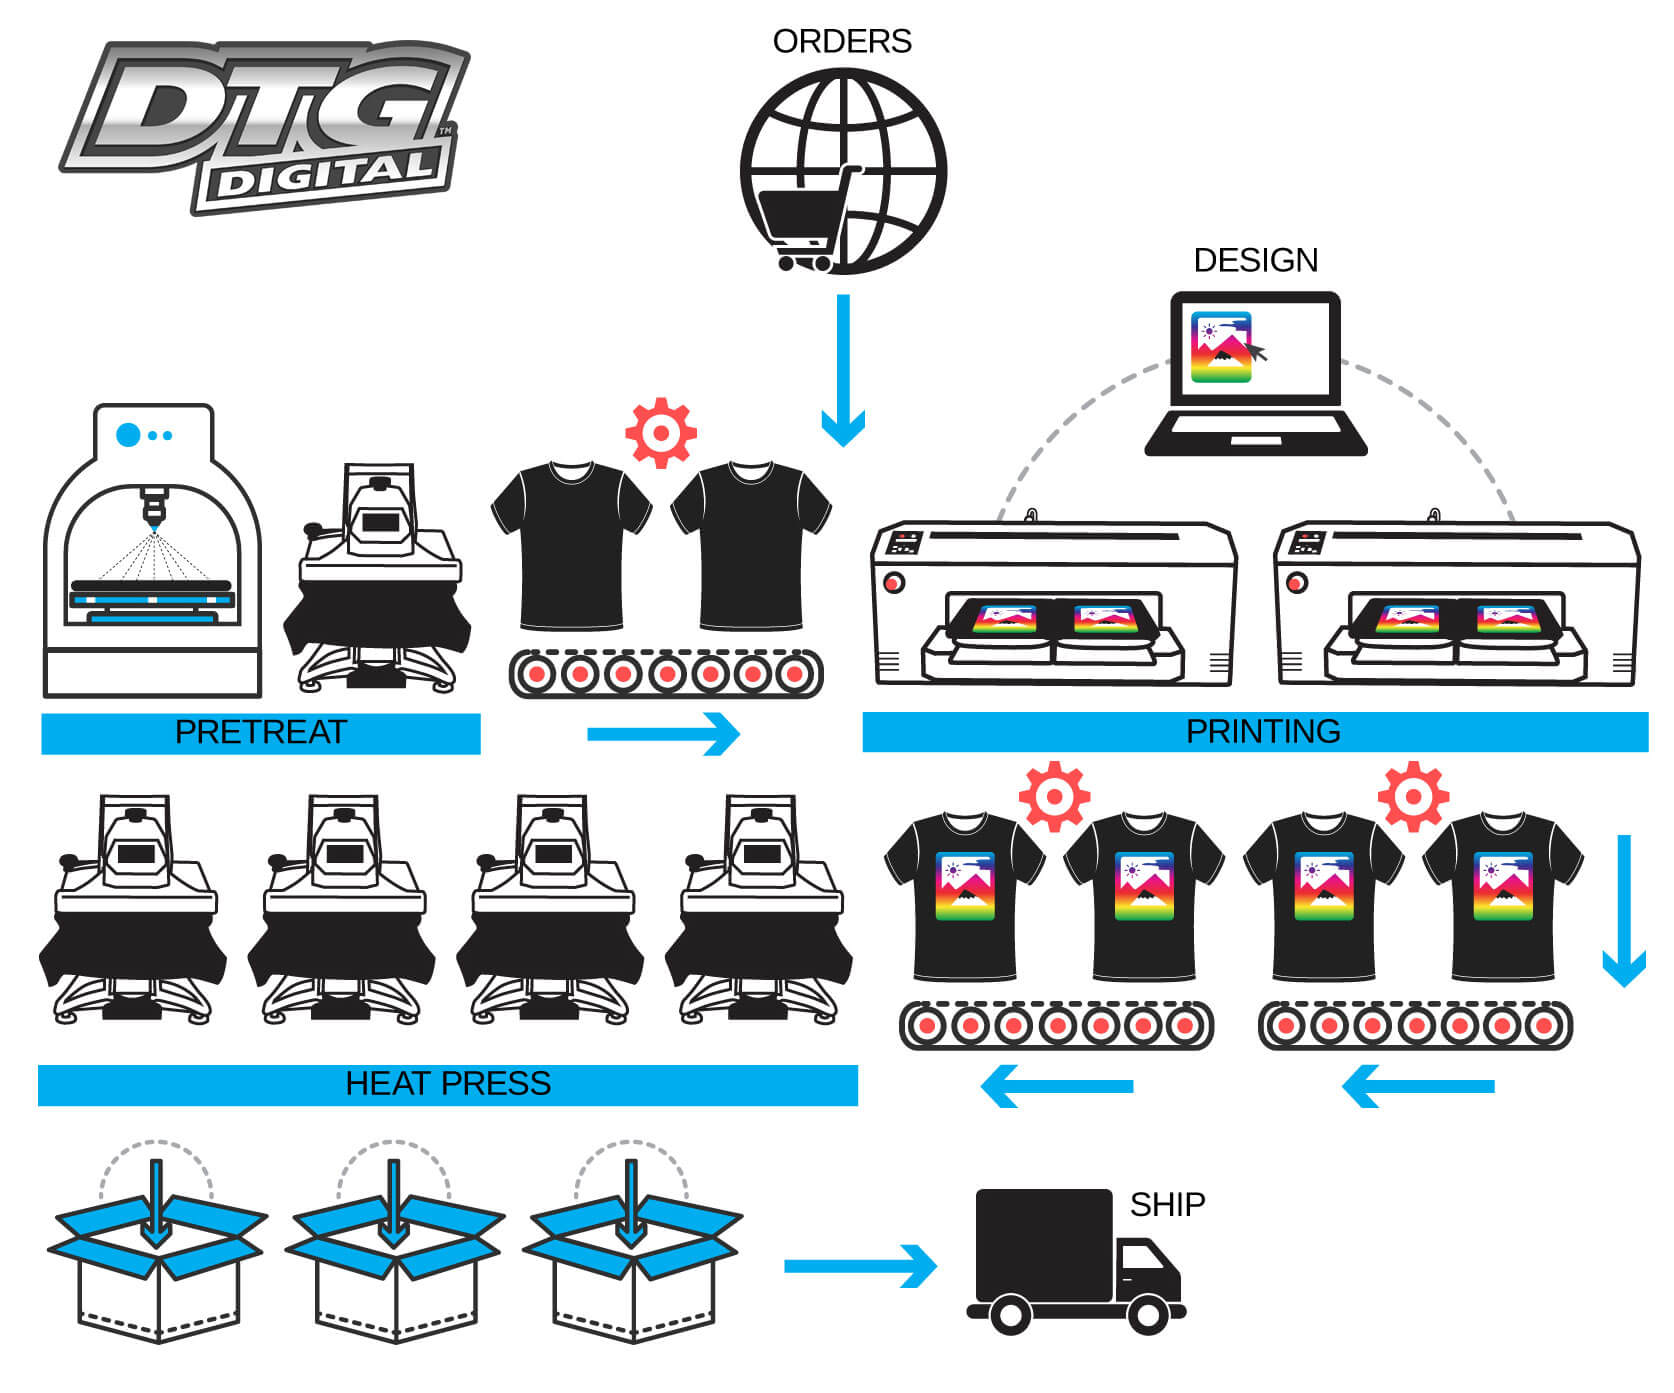 Industrial Digital Textile Printer, DTG Printer, Direct to Fabric Printer -  HPRT